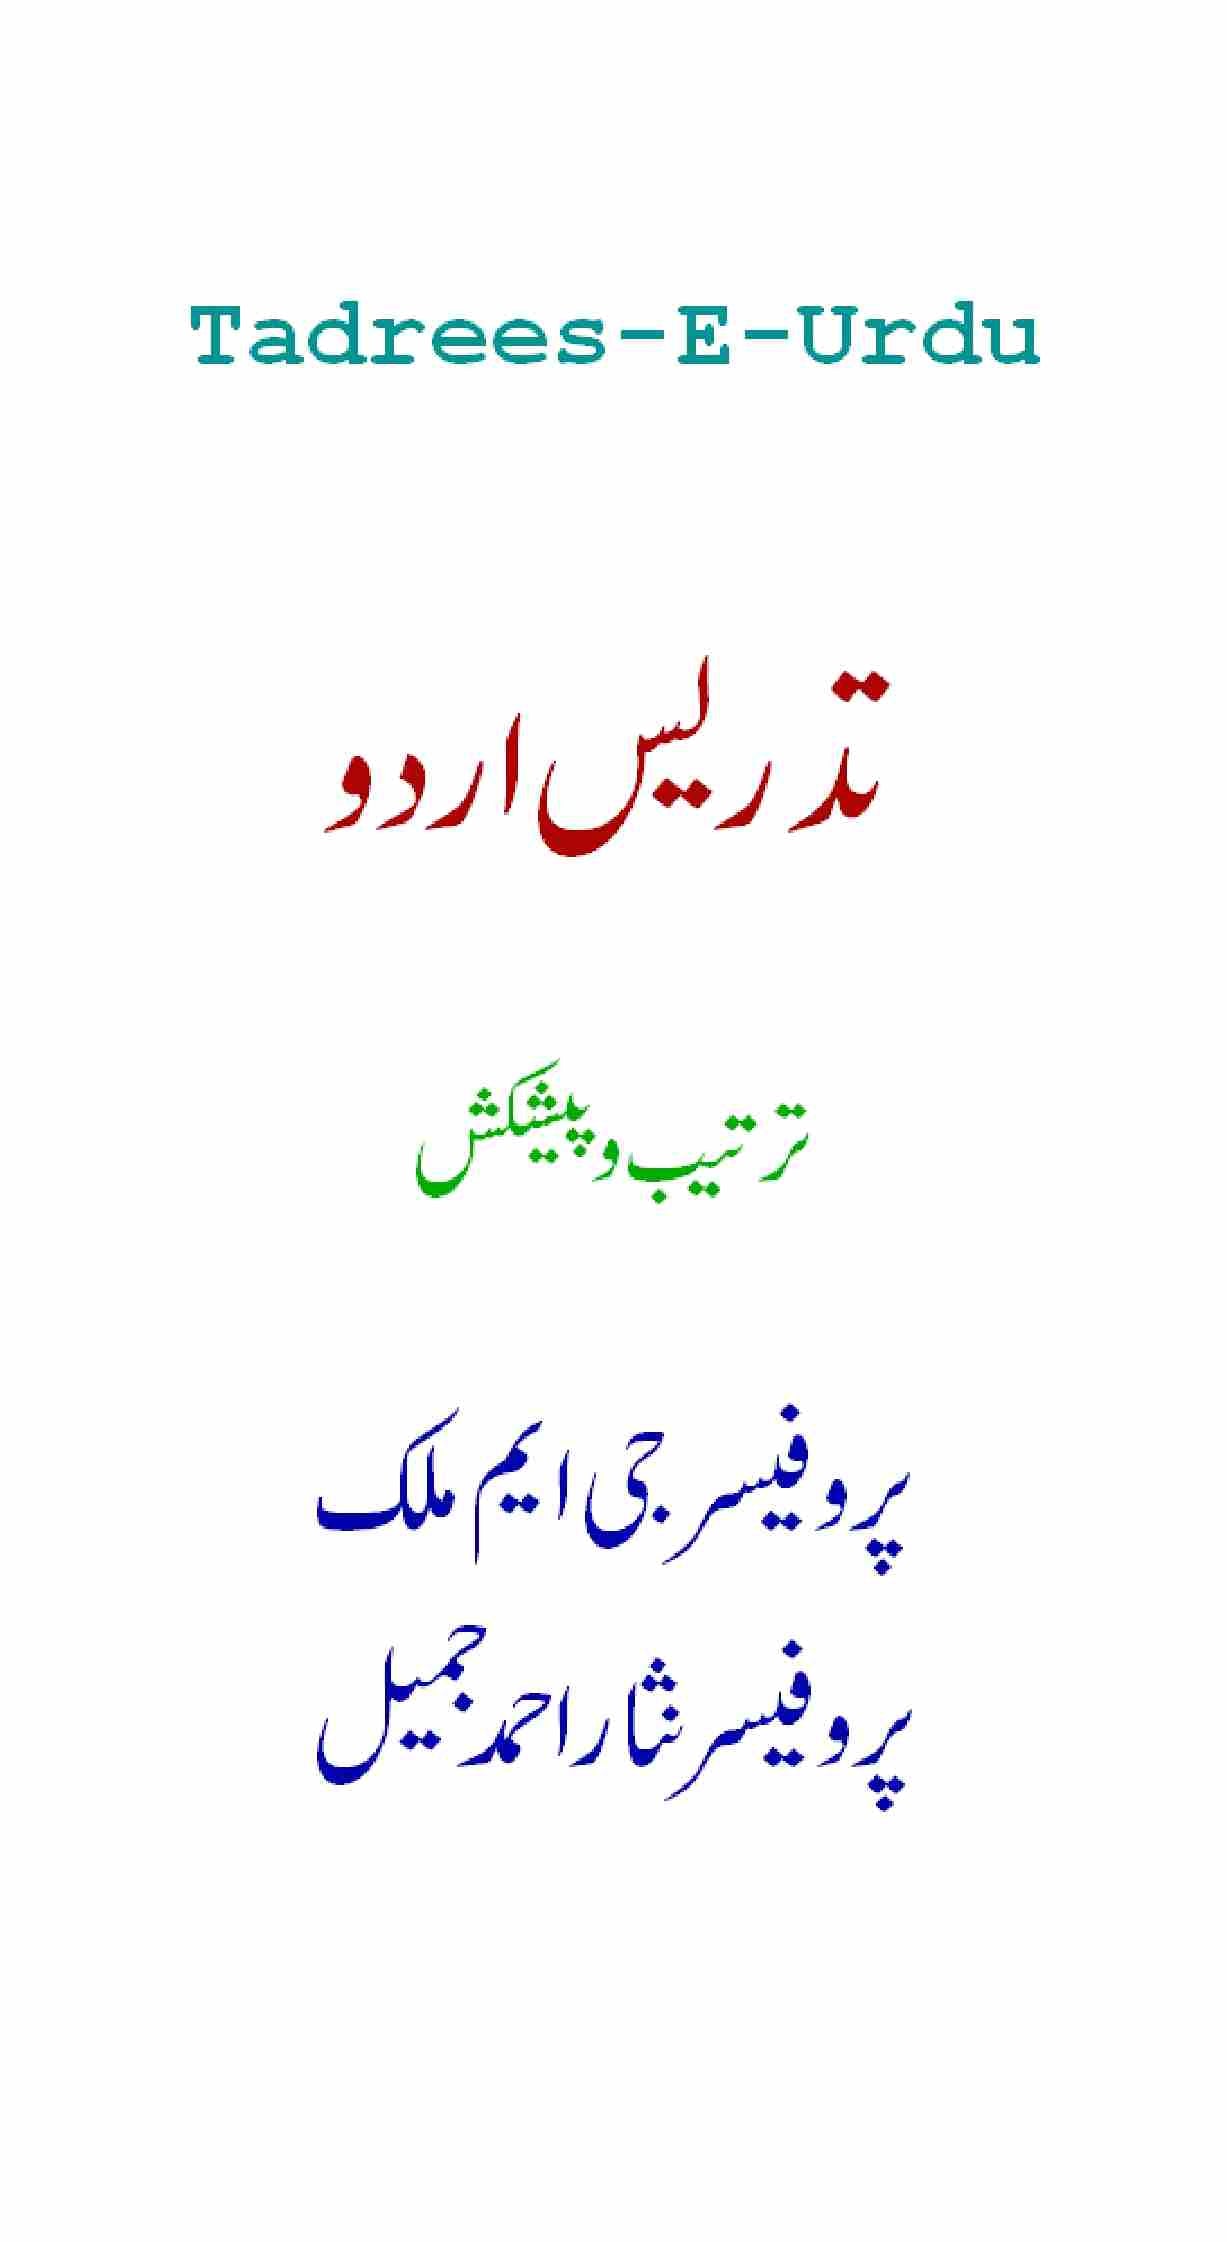 Tadrees-e-Urdu